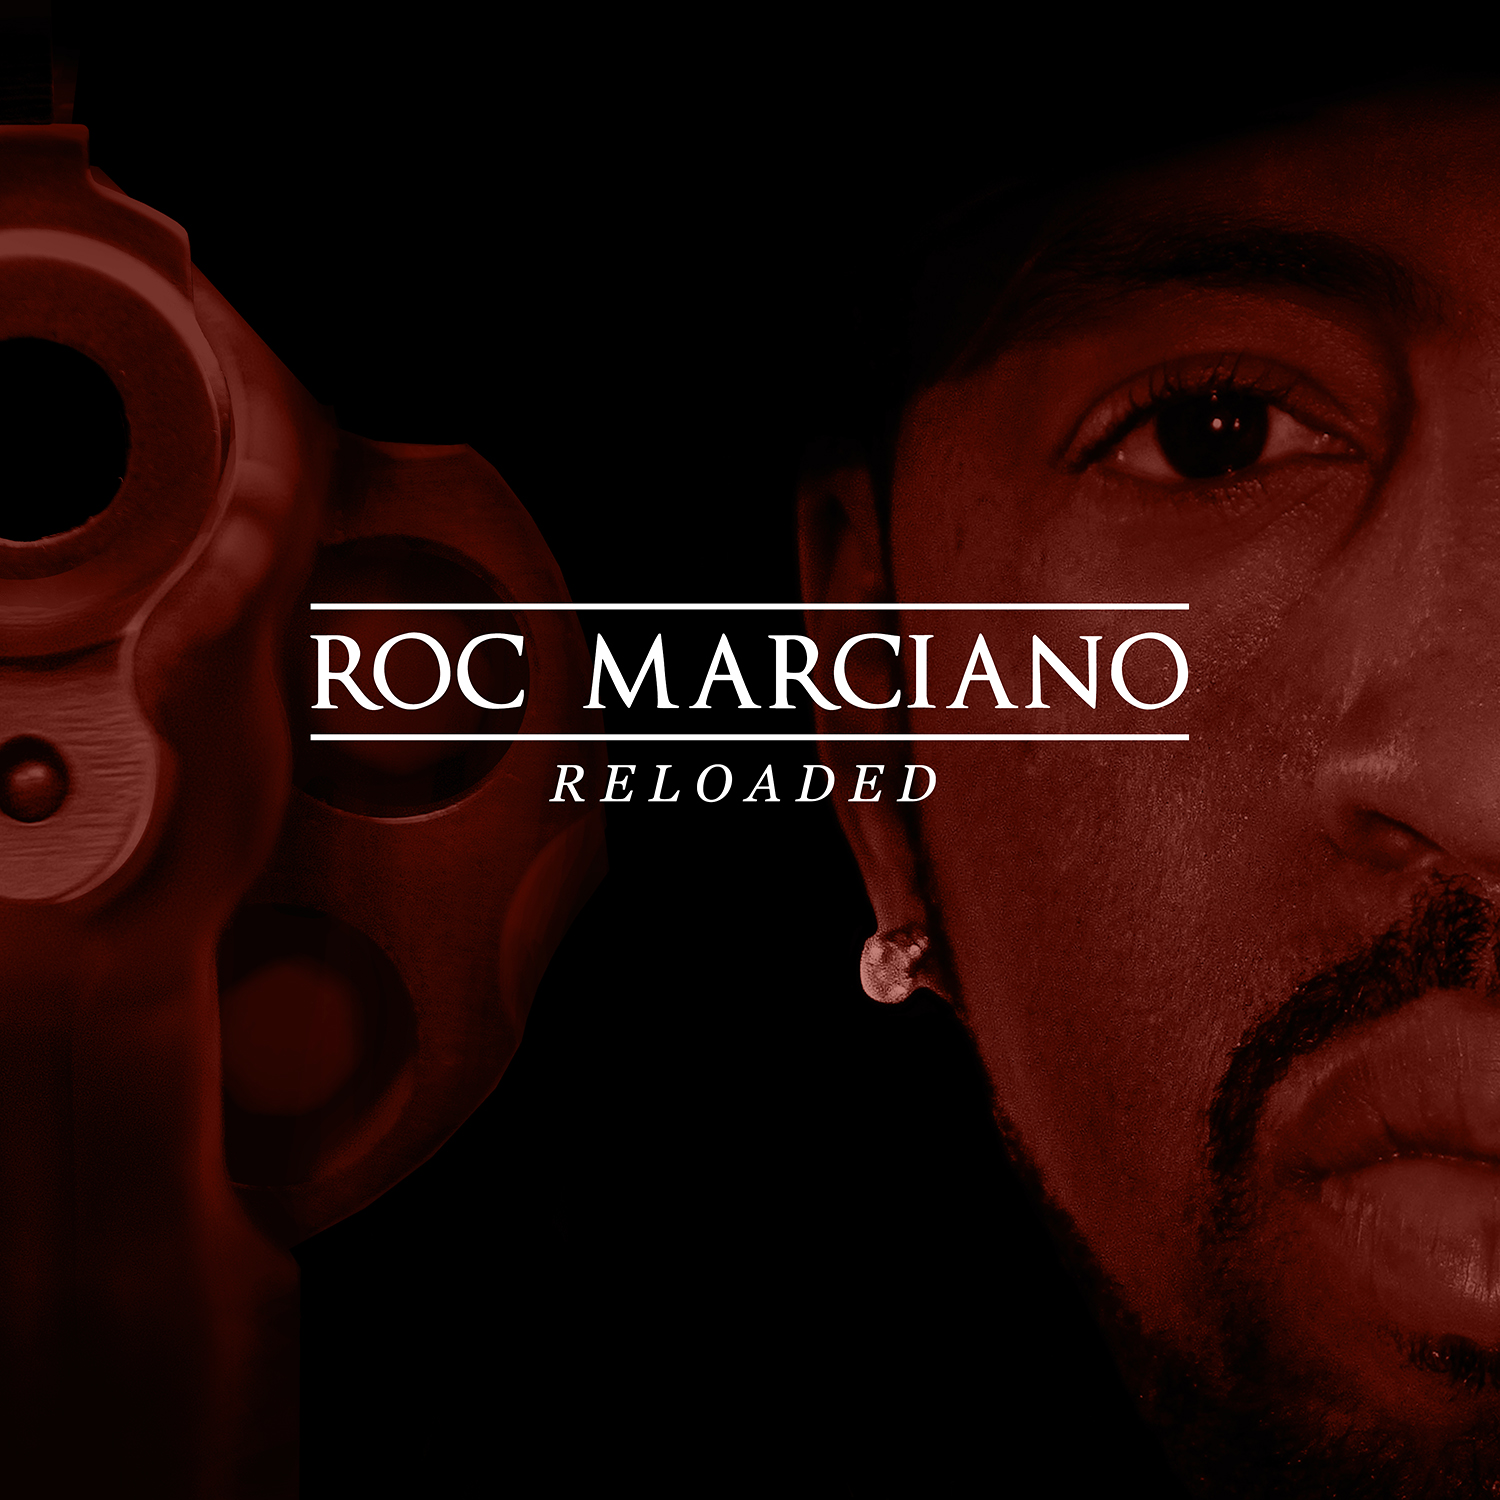 Roc Marciano Reloaded